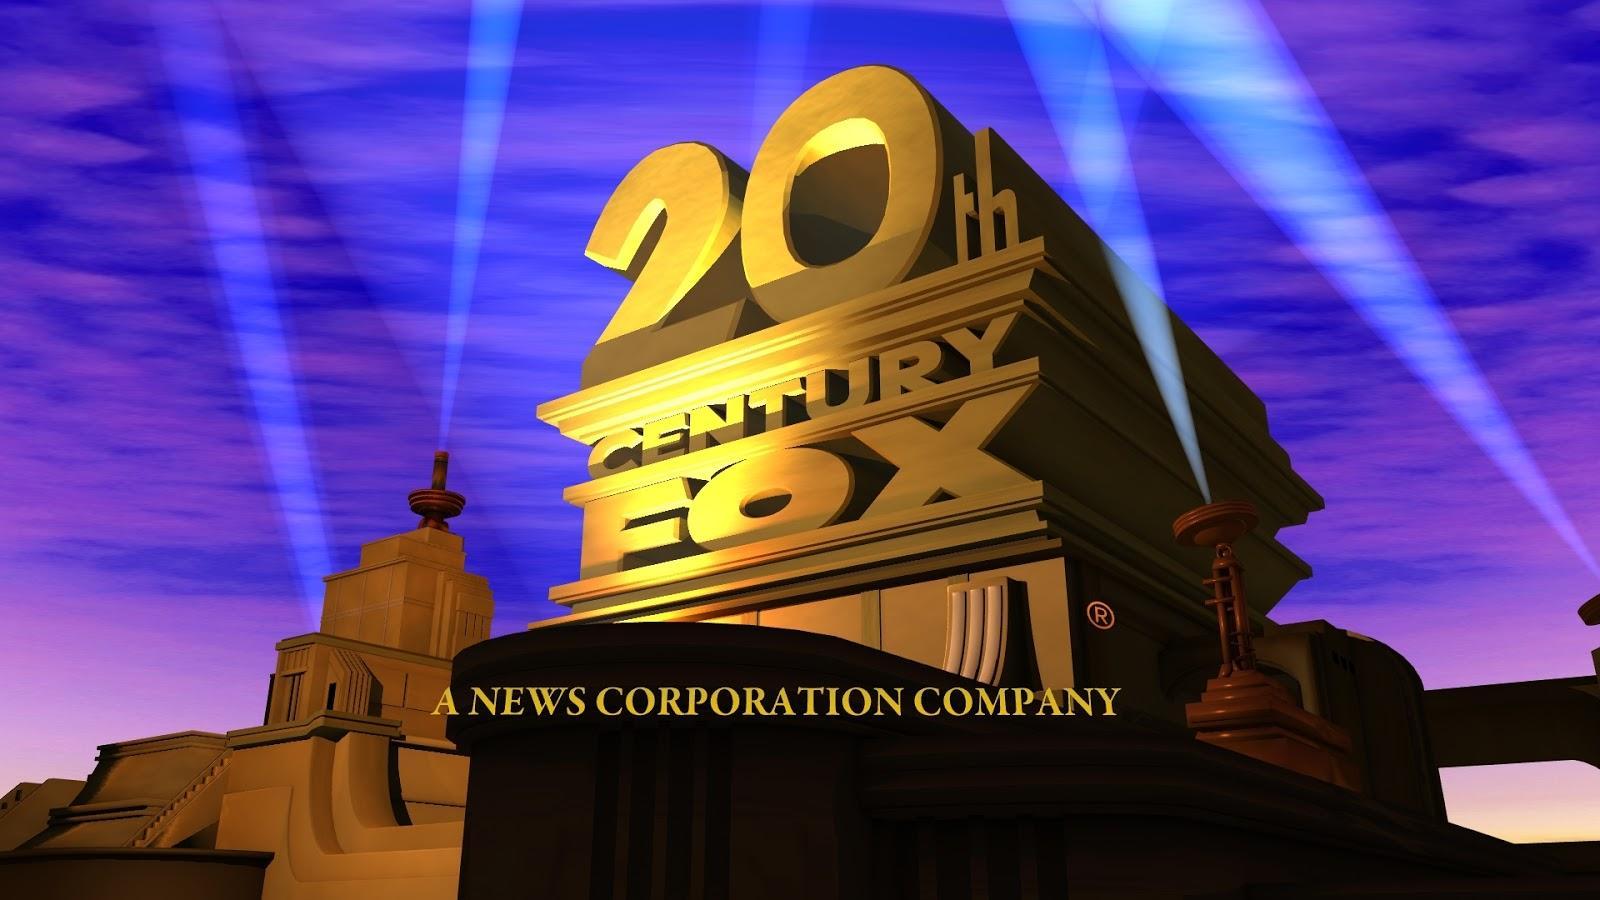 20th Century Fox Wallpaper Hd